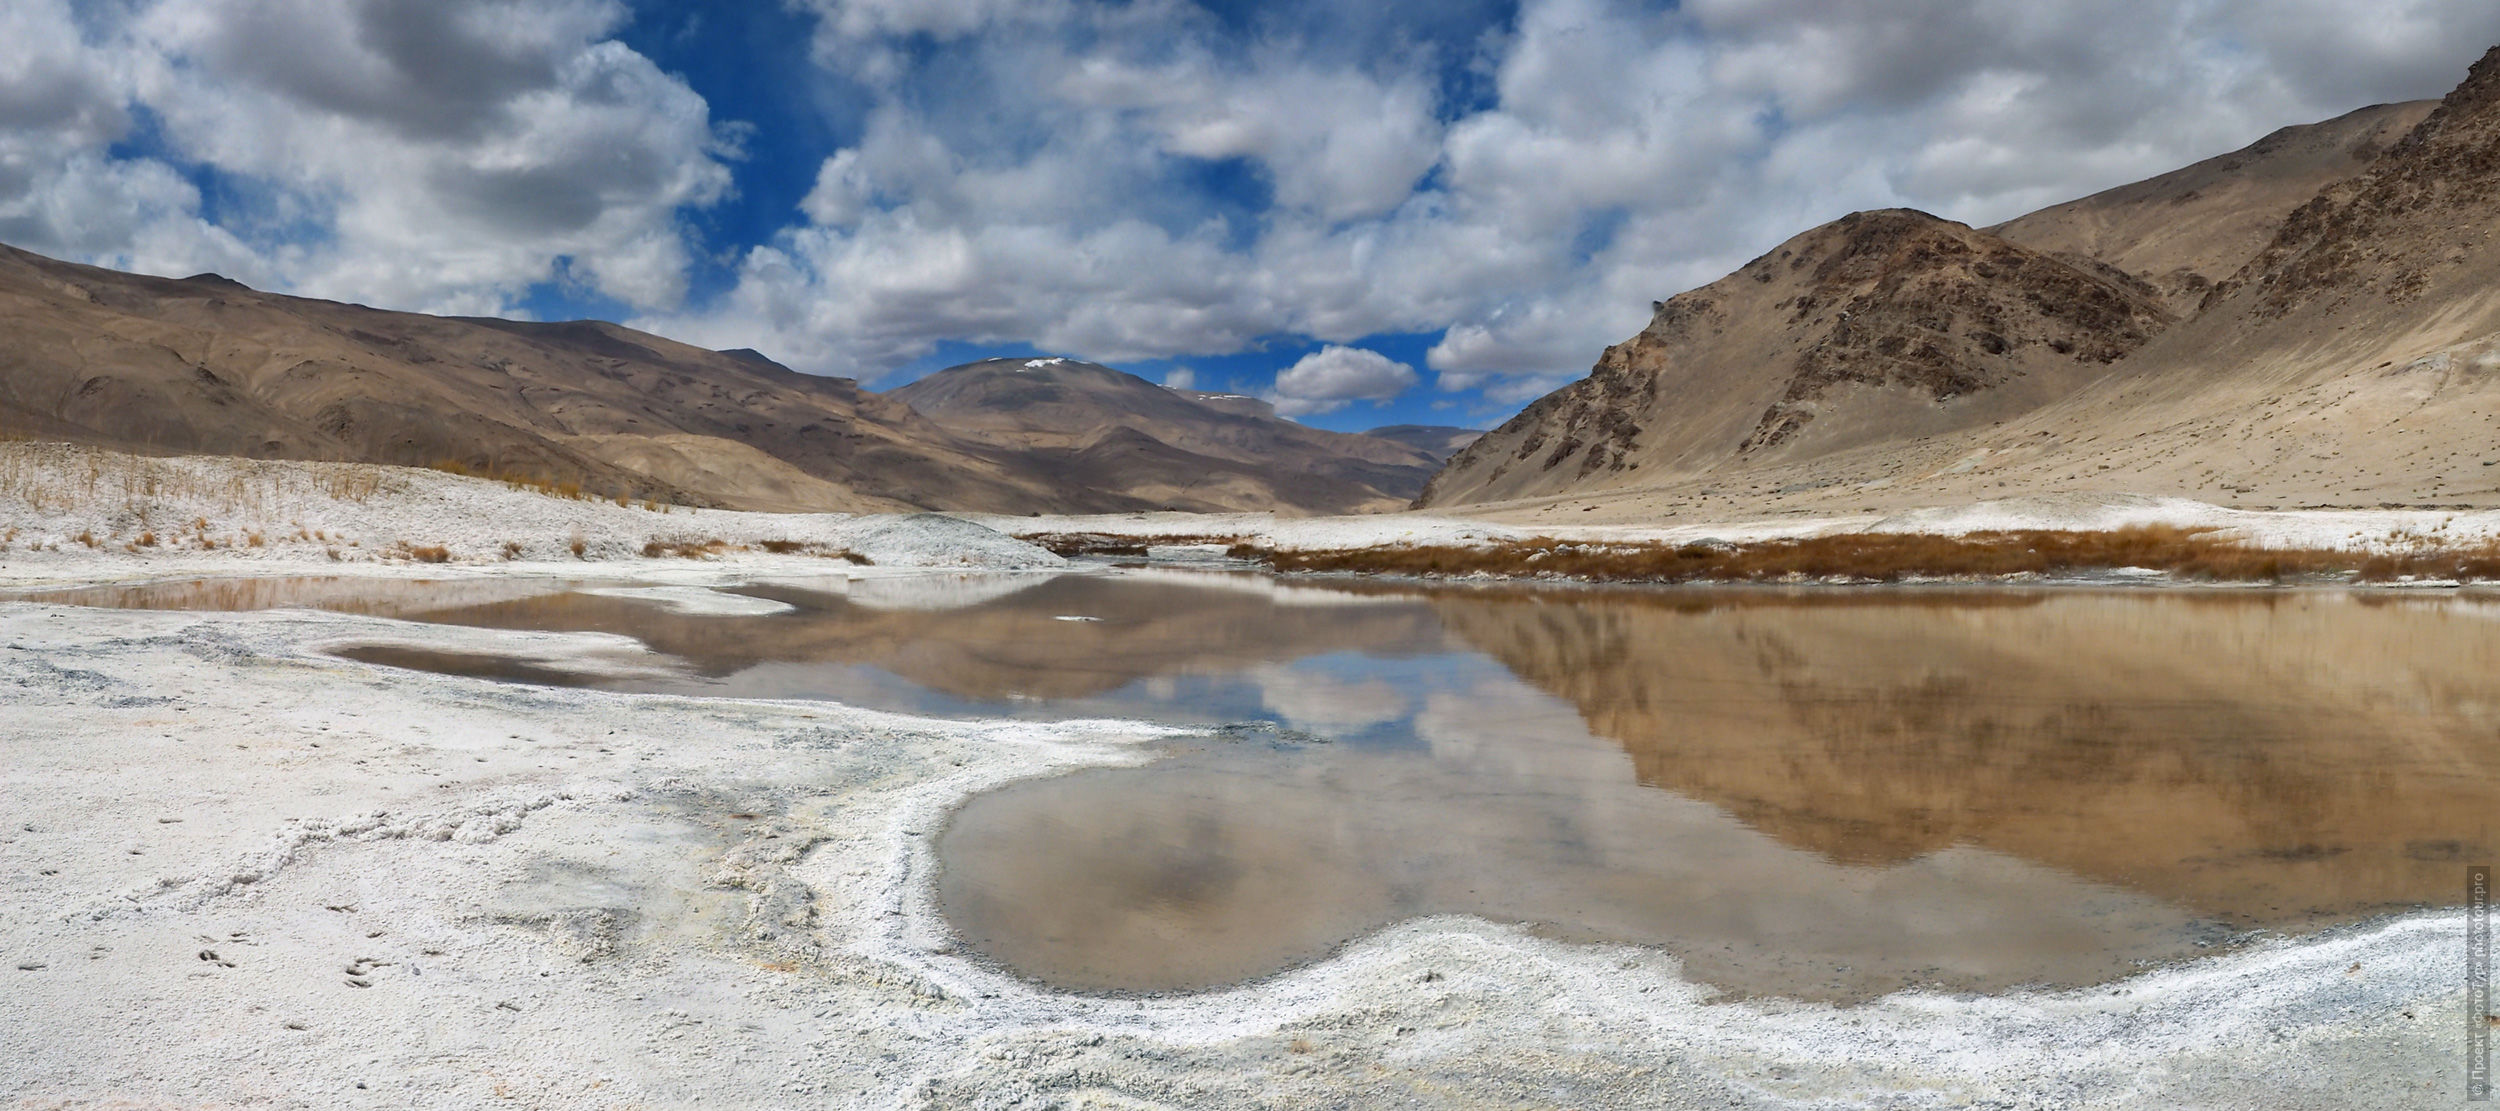 Alpine valley of geysers near Tso Kar lake, Ladakh. Advertising Tibet Lake Tour: Alpine lakes, valley of geysers, Lamayuru, Tsvetnoye Gory, 01 - 10.09. 2023 year.